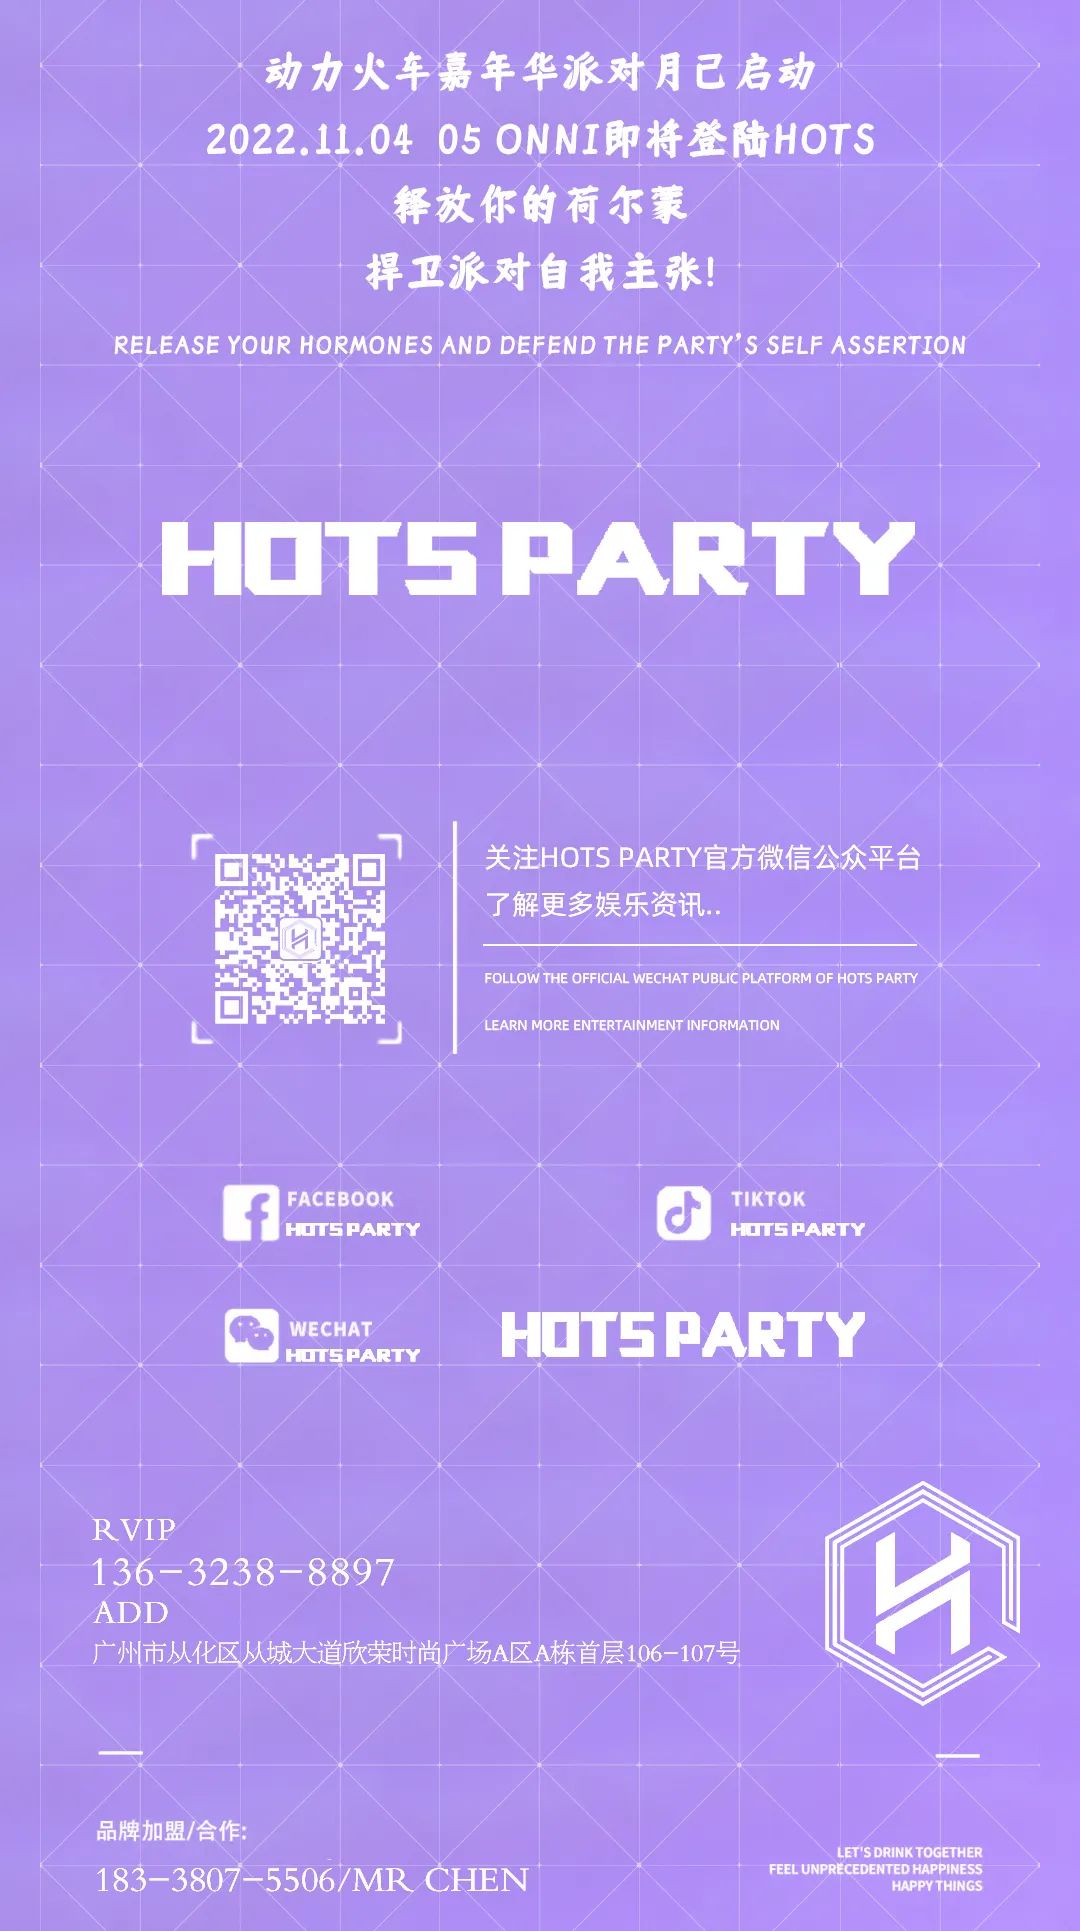 #HOTS ·11.04-05你以为是小甜心，更是超能量炸弹-广州HOTS酒吧/HOTS PARTY